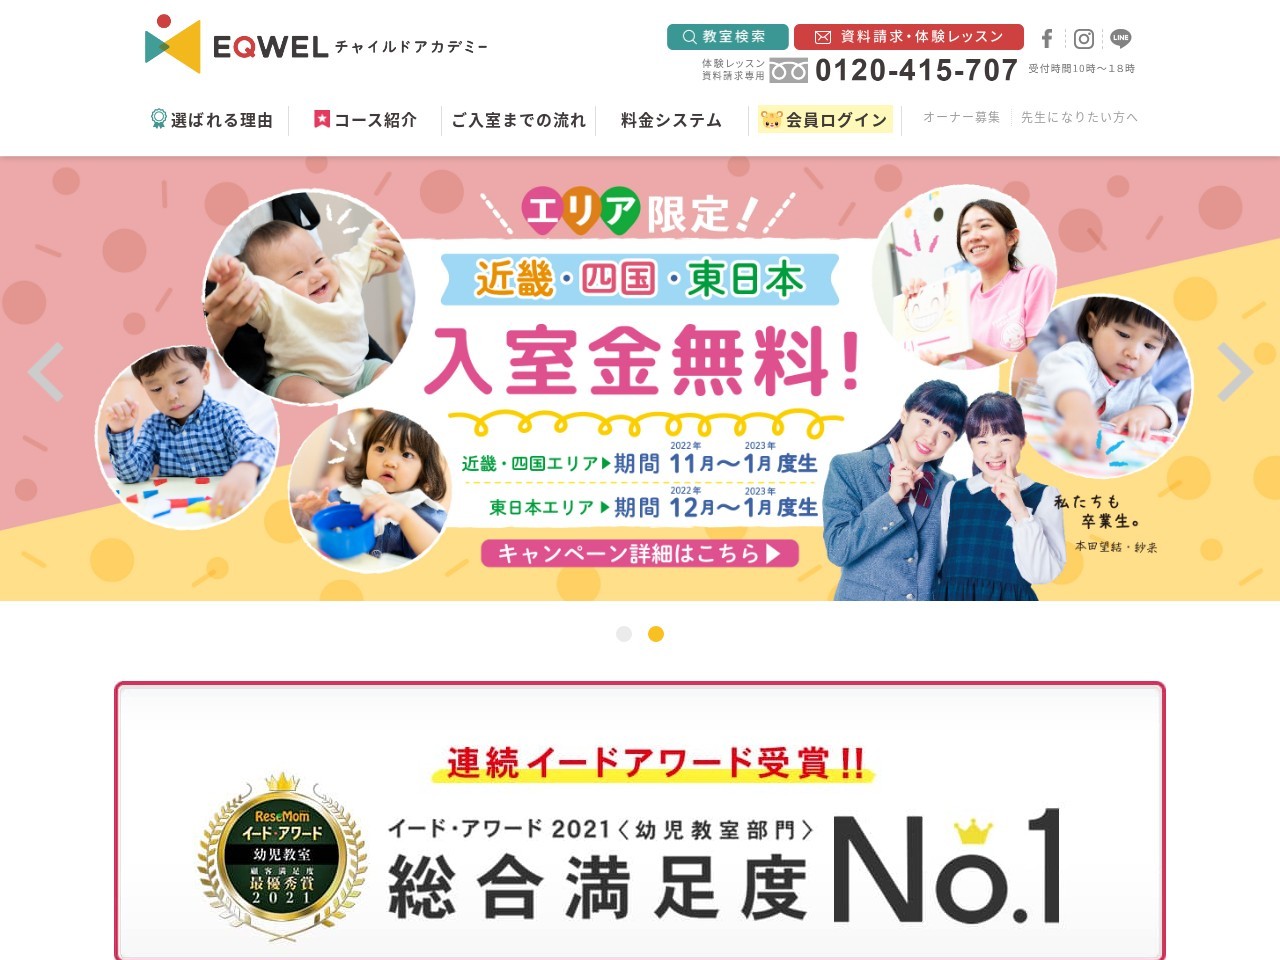 EQWEL チャイルドアカデミー 京都六地蔵教室のクチコミ・評判とホームページ